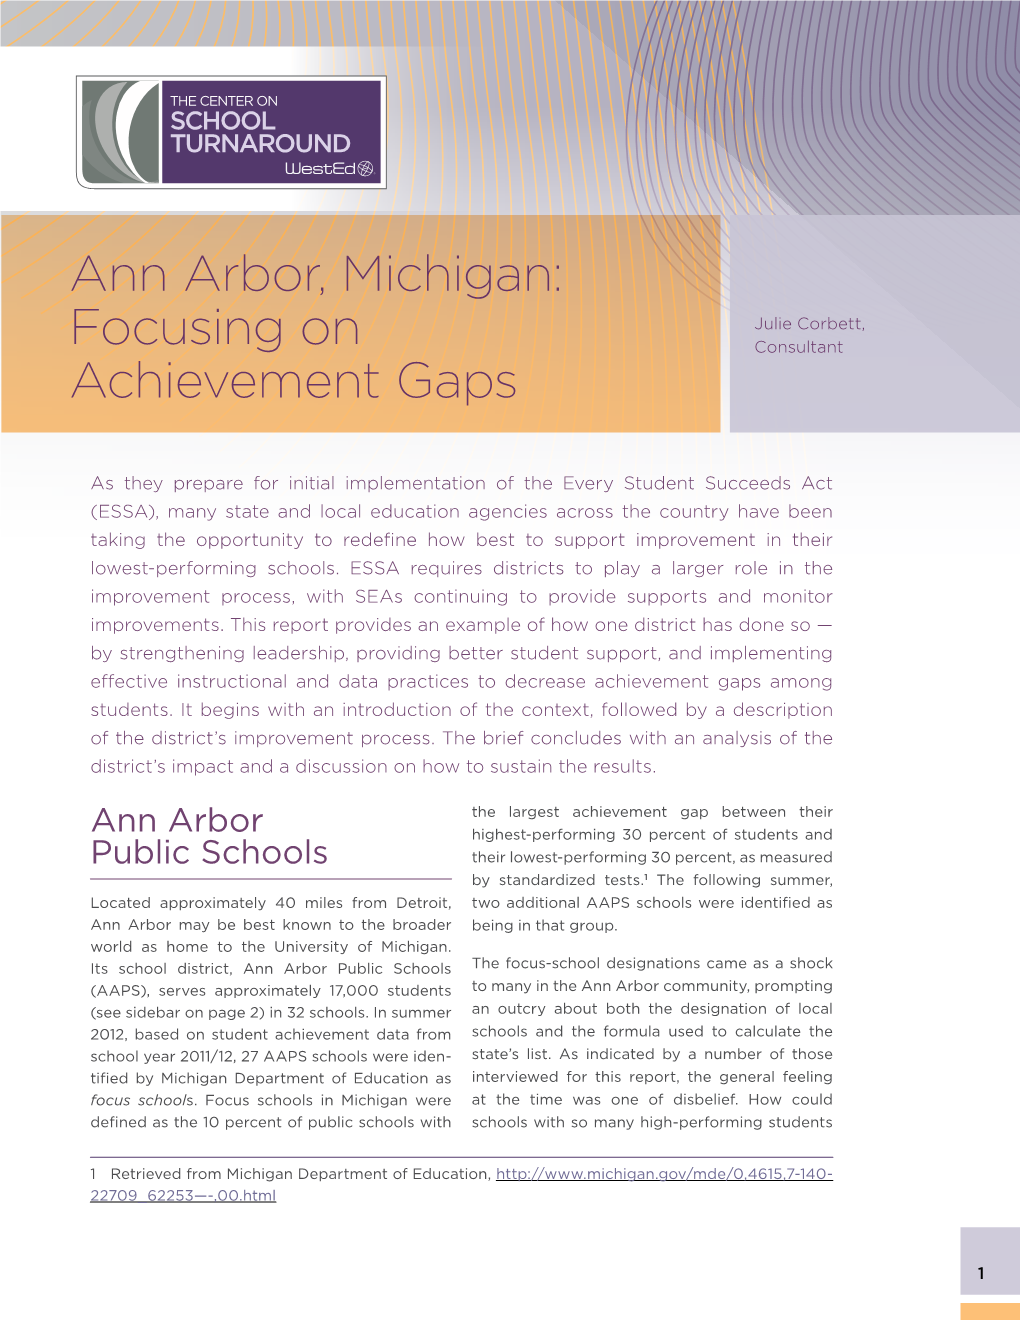 Ann Arbor, Michigan: Focusing on Achievement Gaps